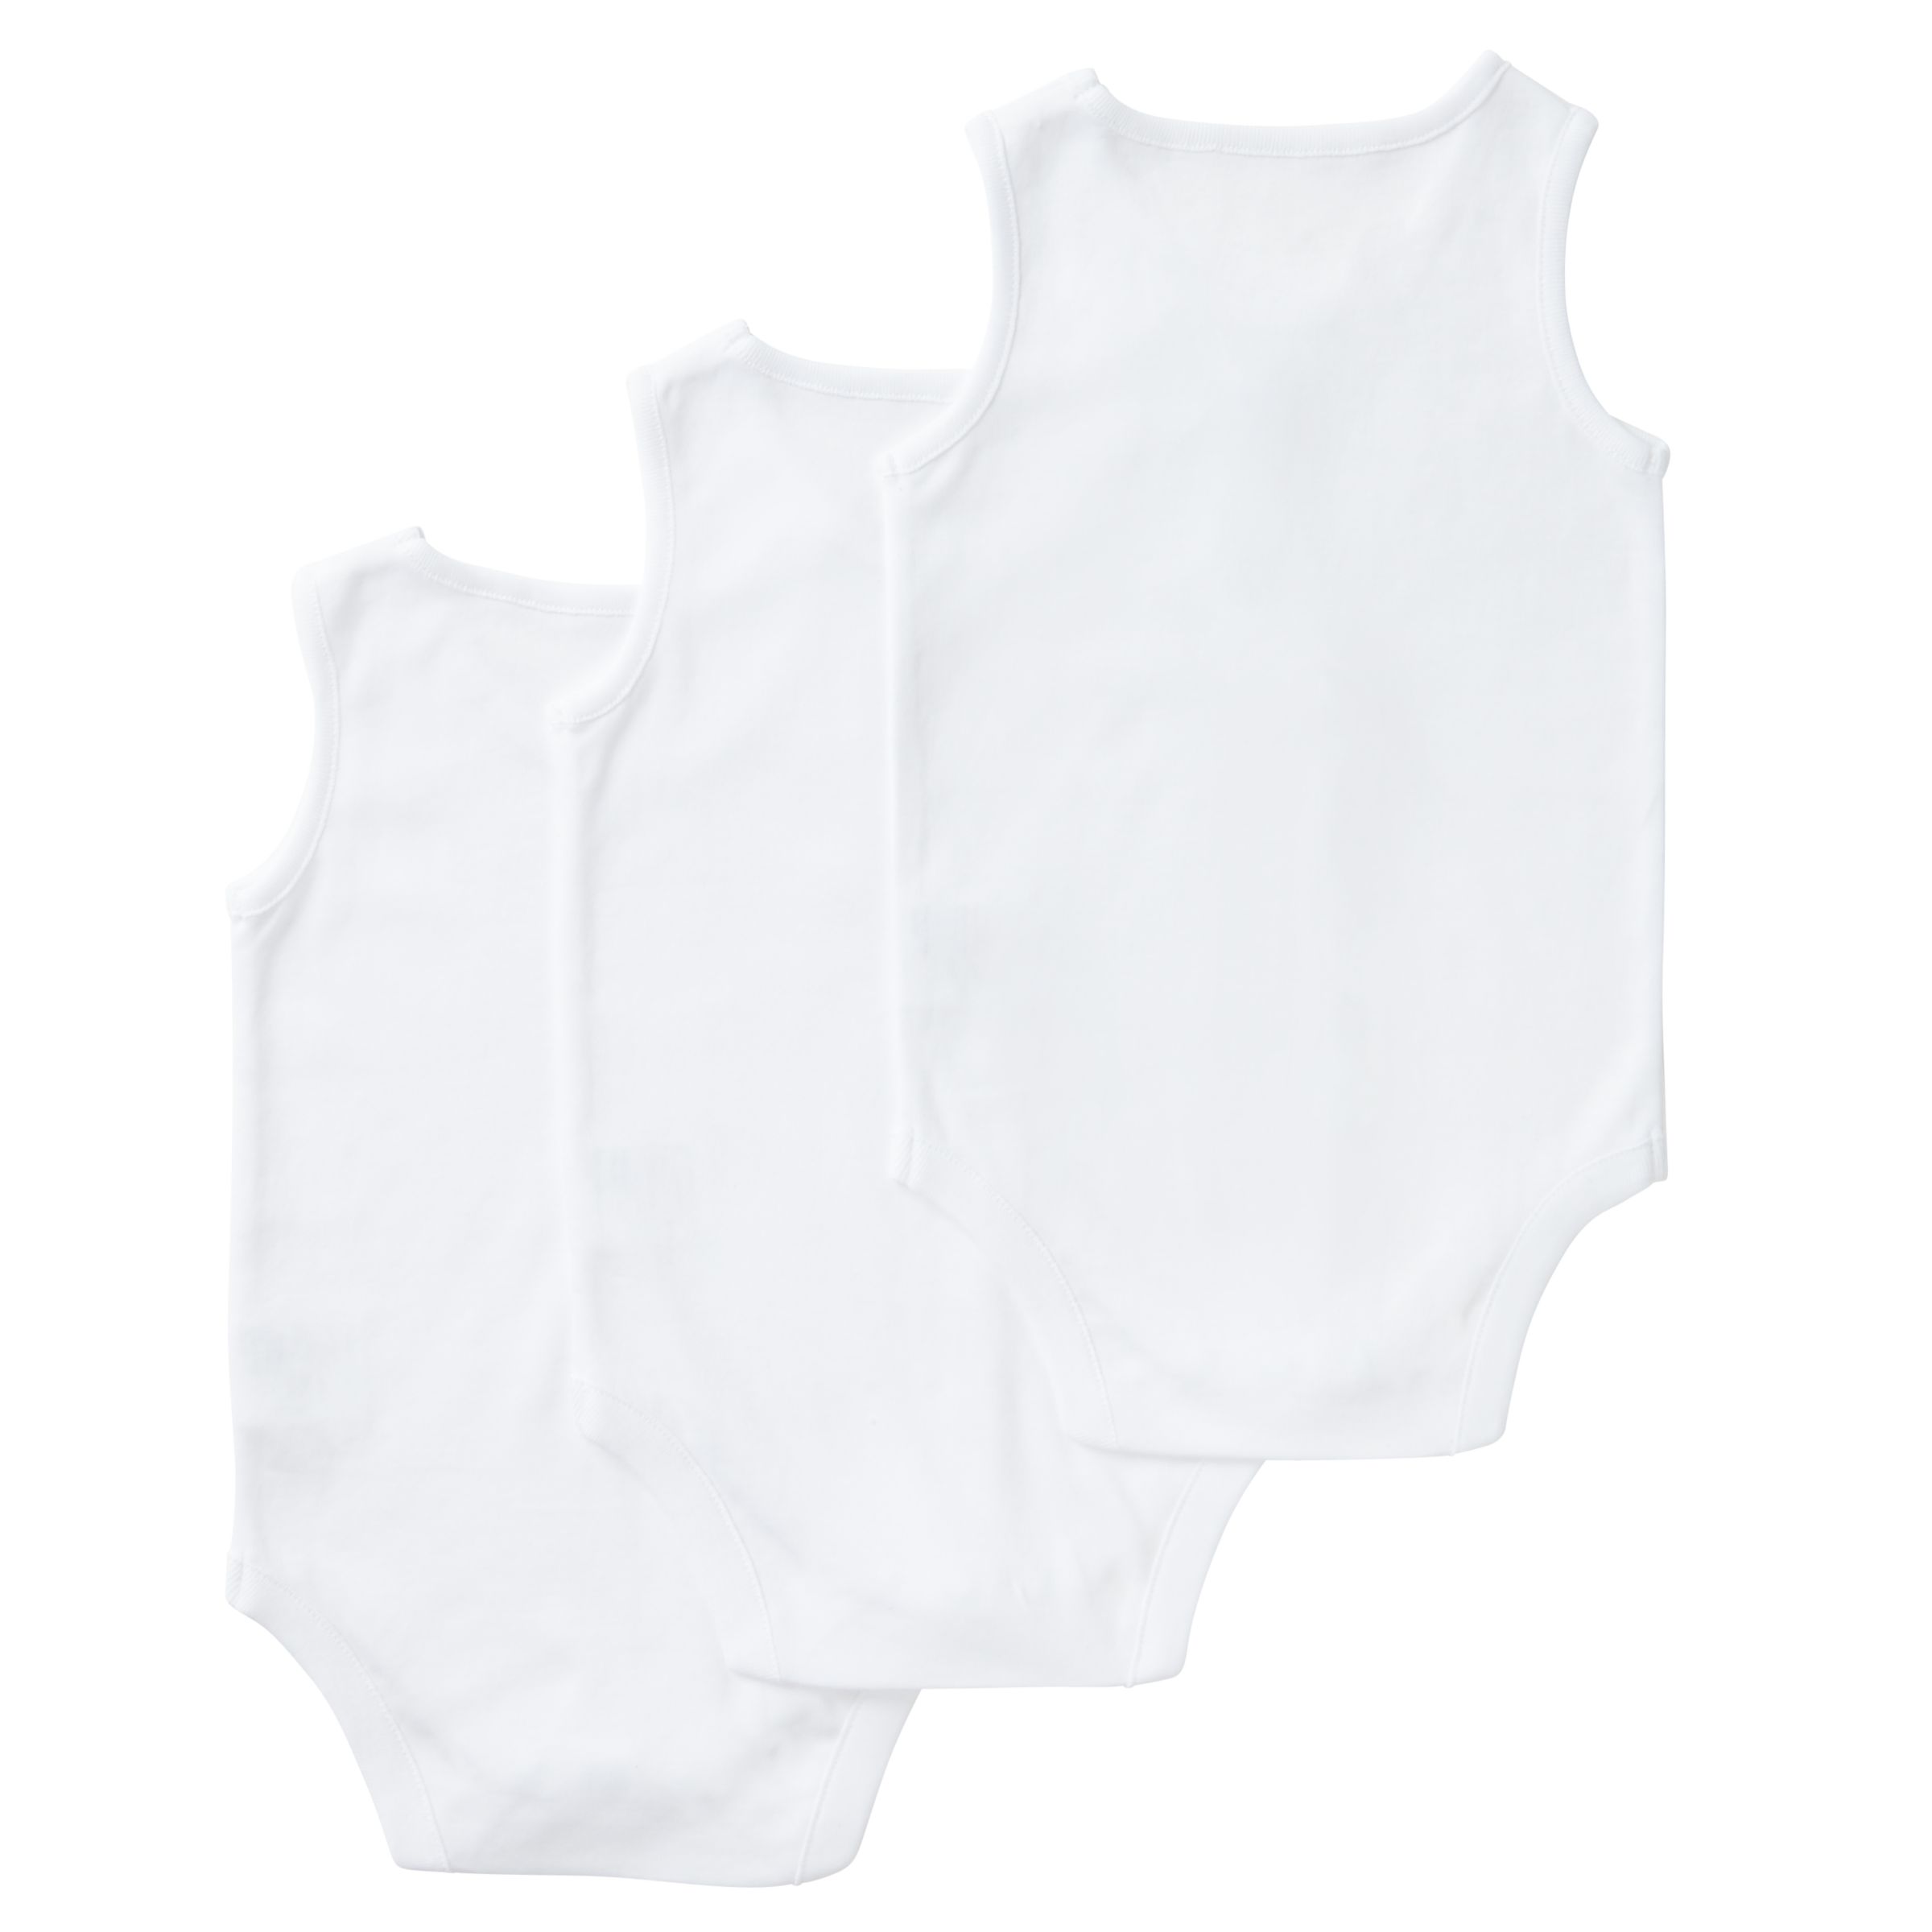 John Lewis Baby Pima Cotton Sleeveless Bodysuit, Pack of 3, White, Early baby